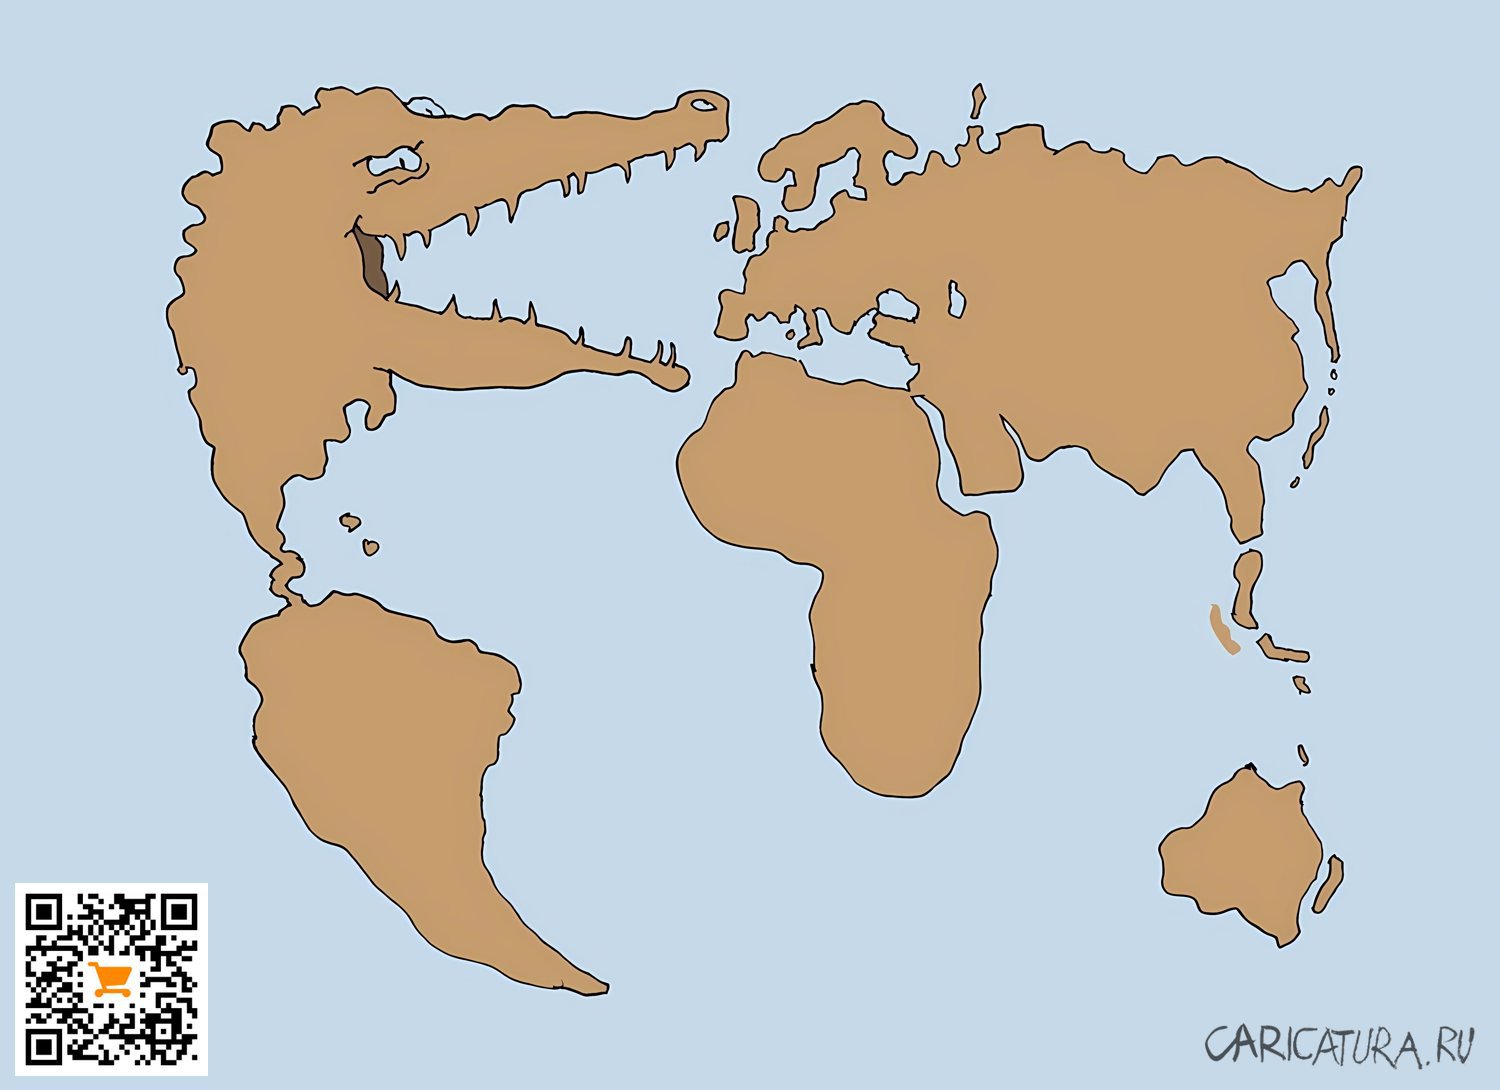 Карикатура "Карта мира", Валерий Тарасенко